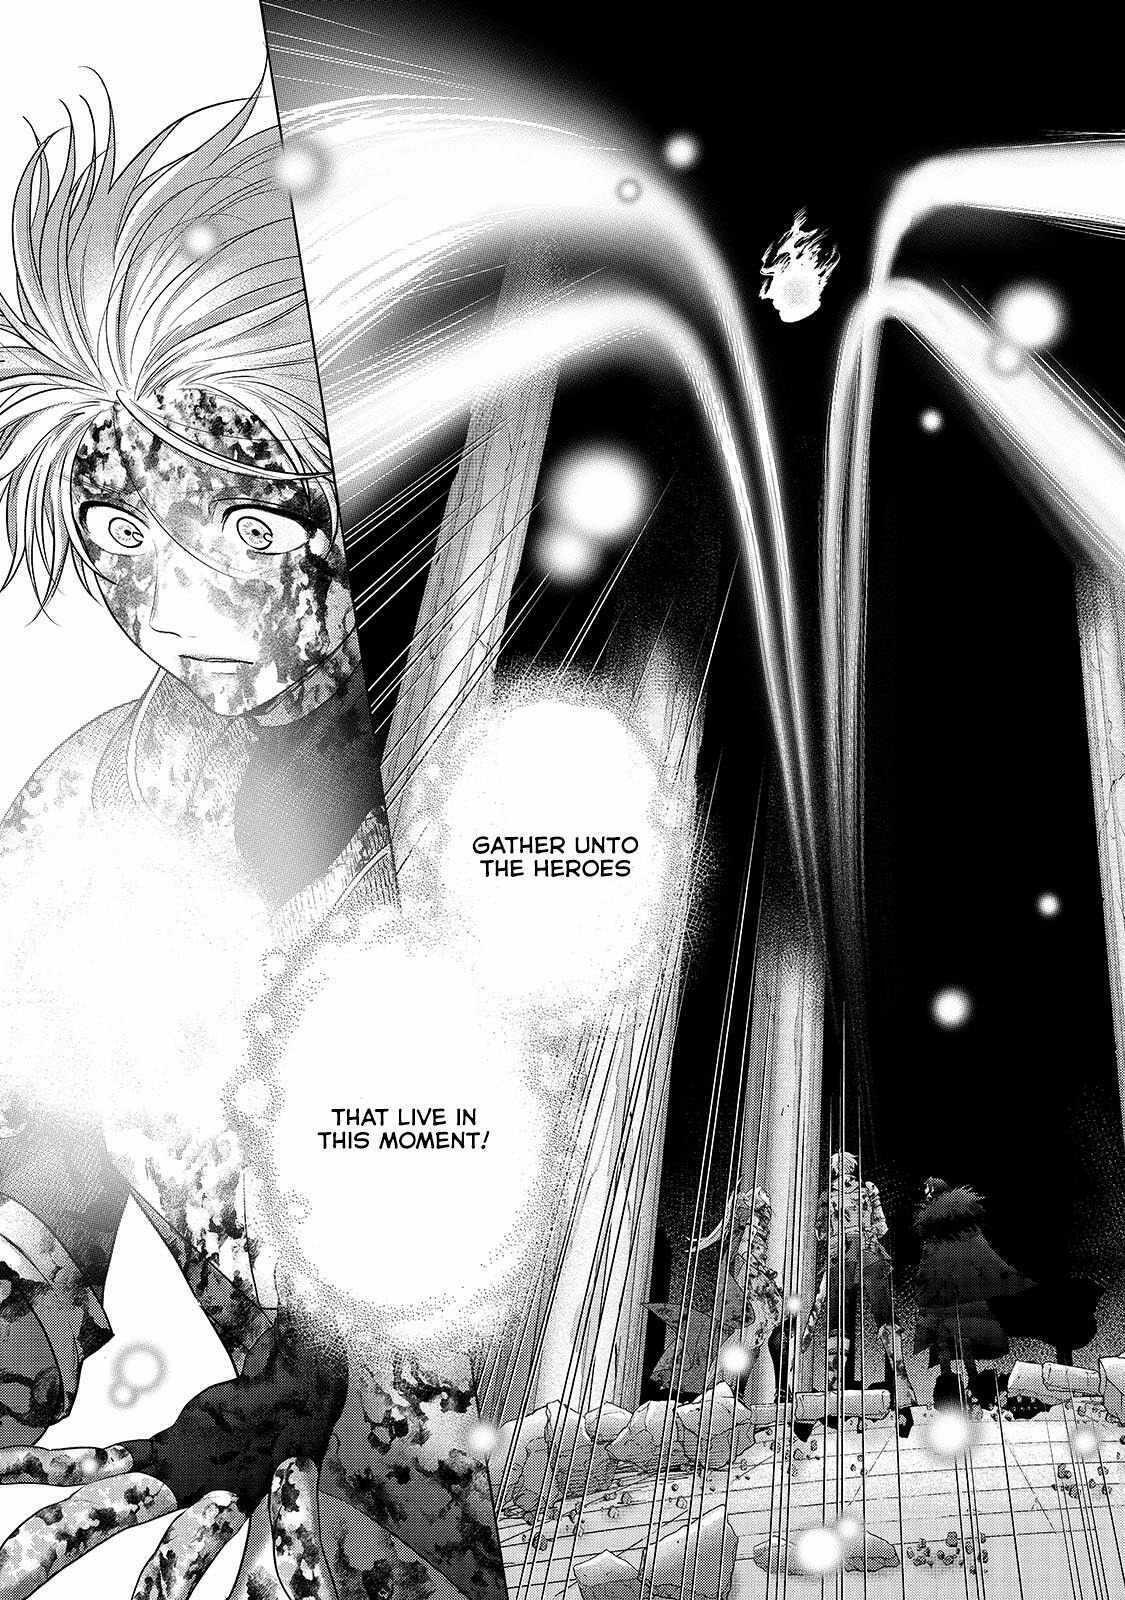 Read Manga Saihate No Paladin - Chapter 61.3